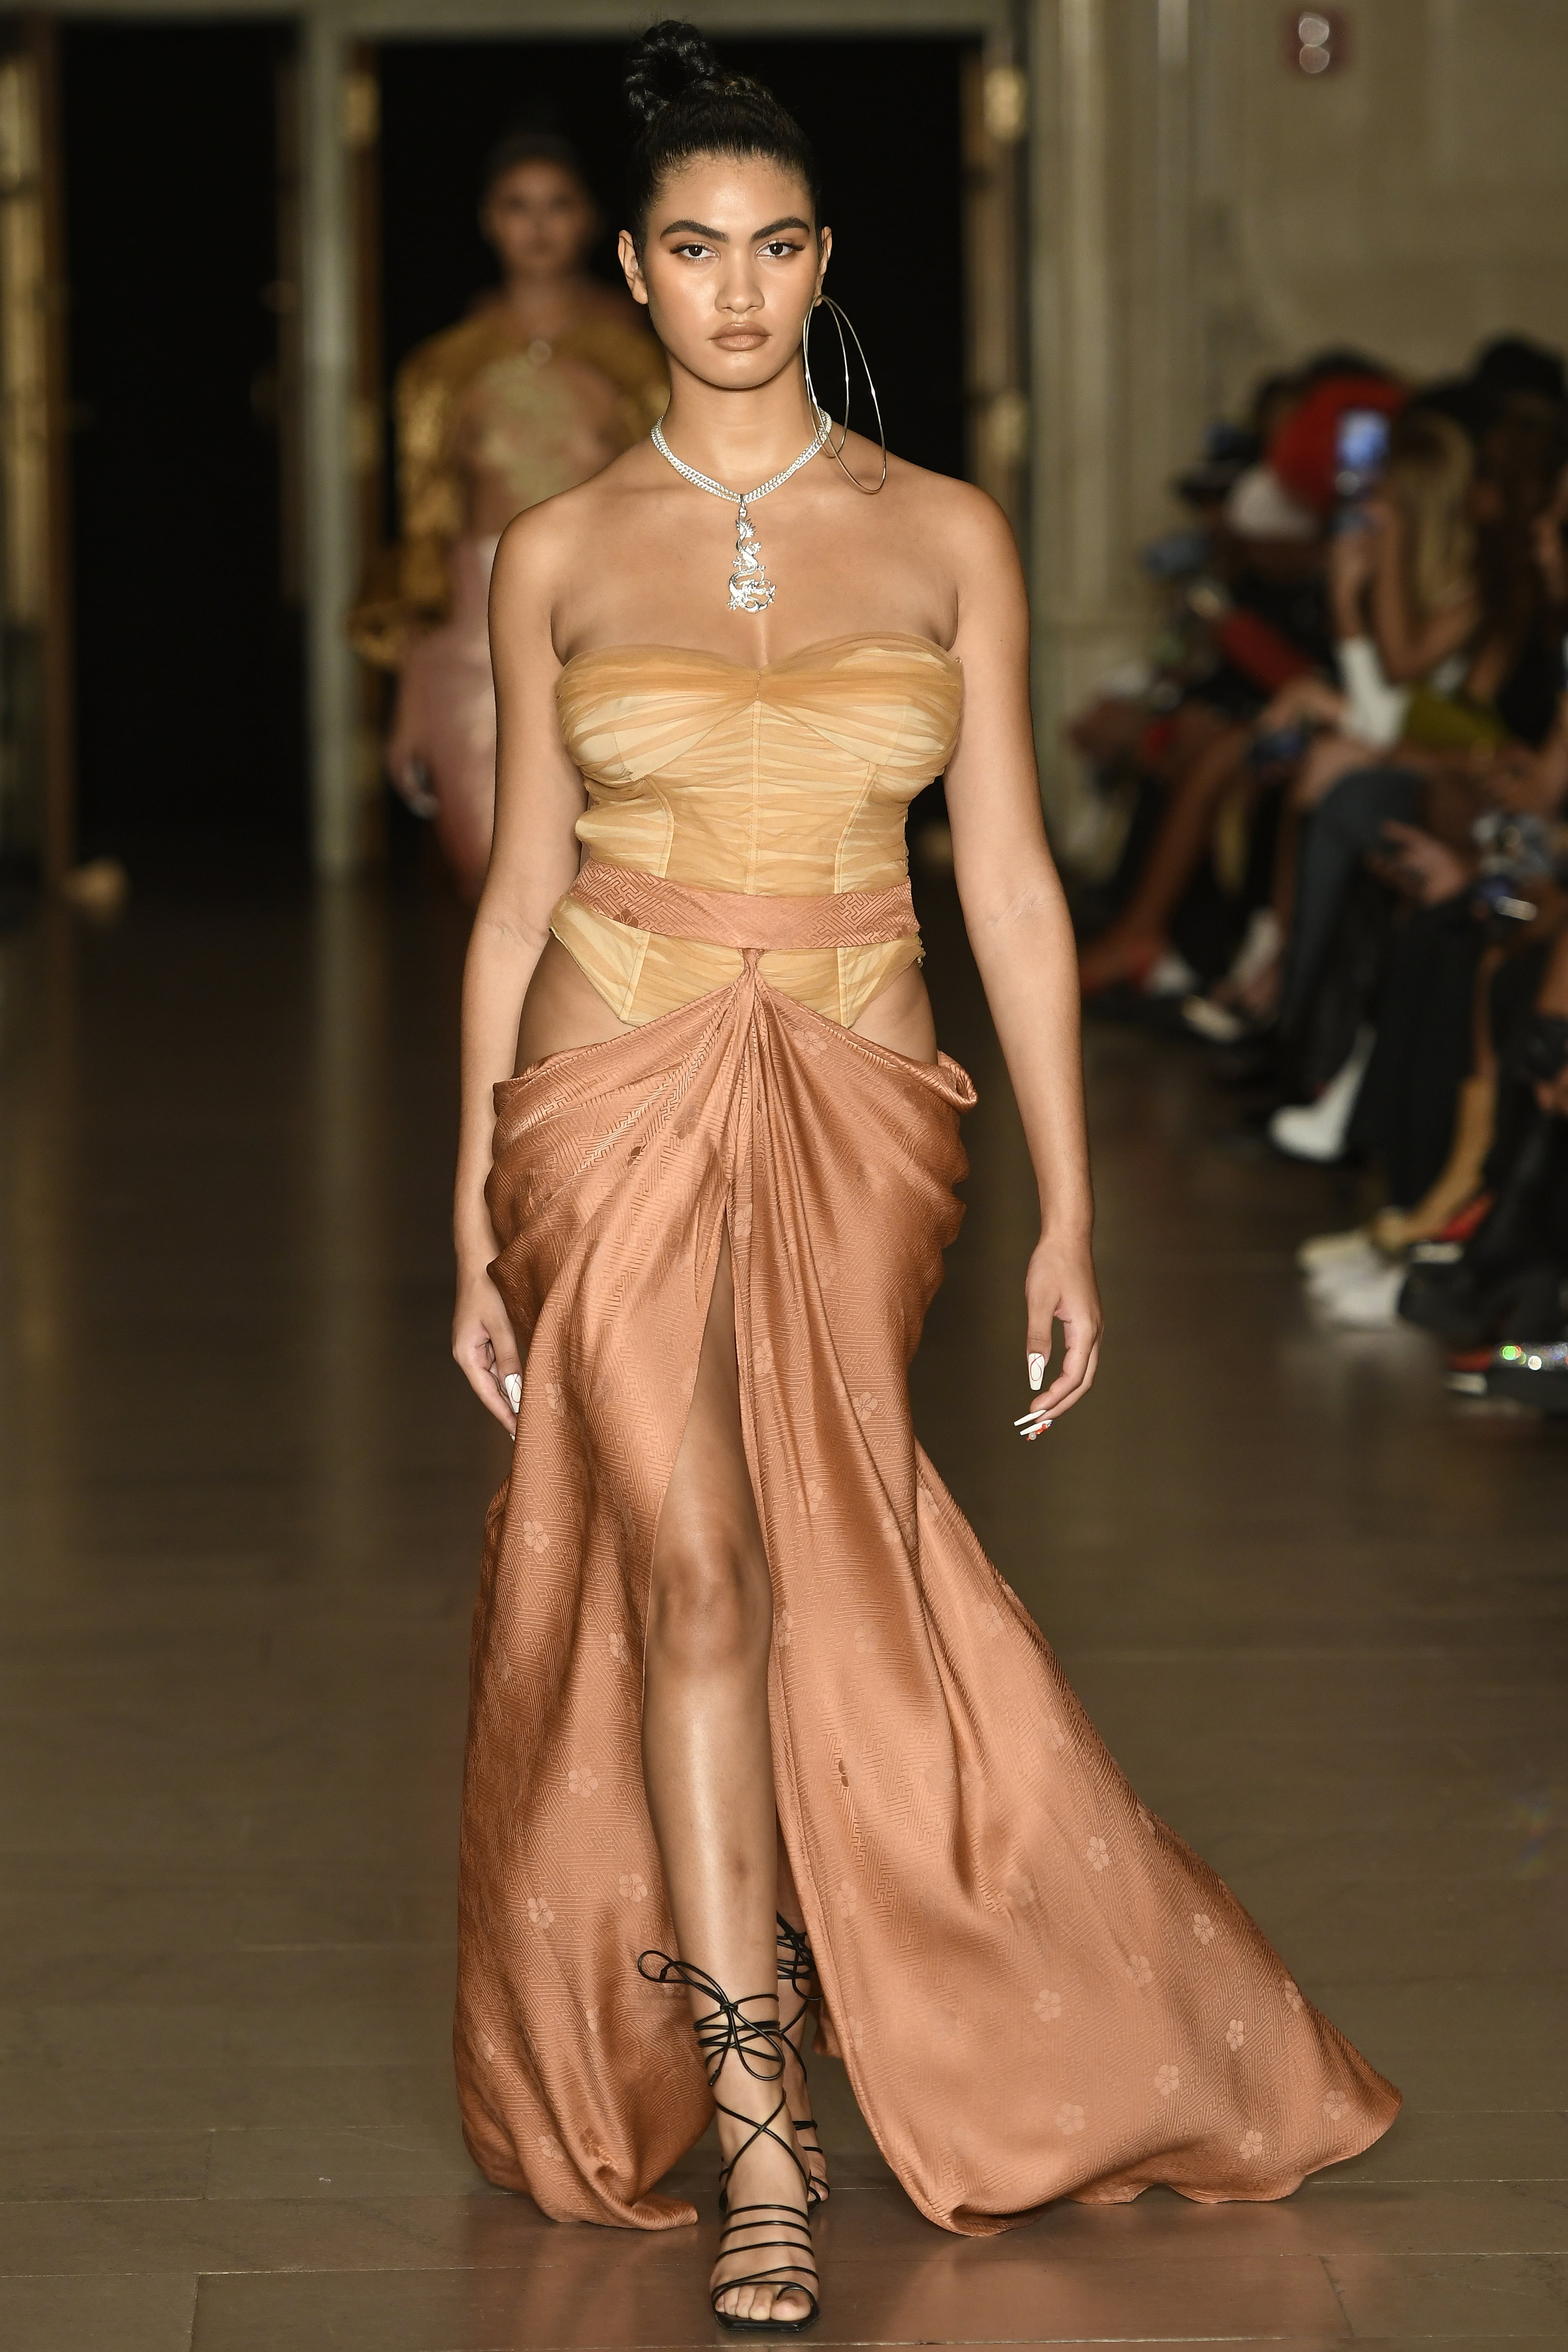 Megan Fox's Kim Shui Corset Dress at Paris Fashion Week | POPSUGAR